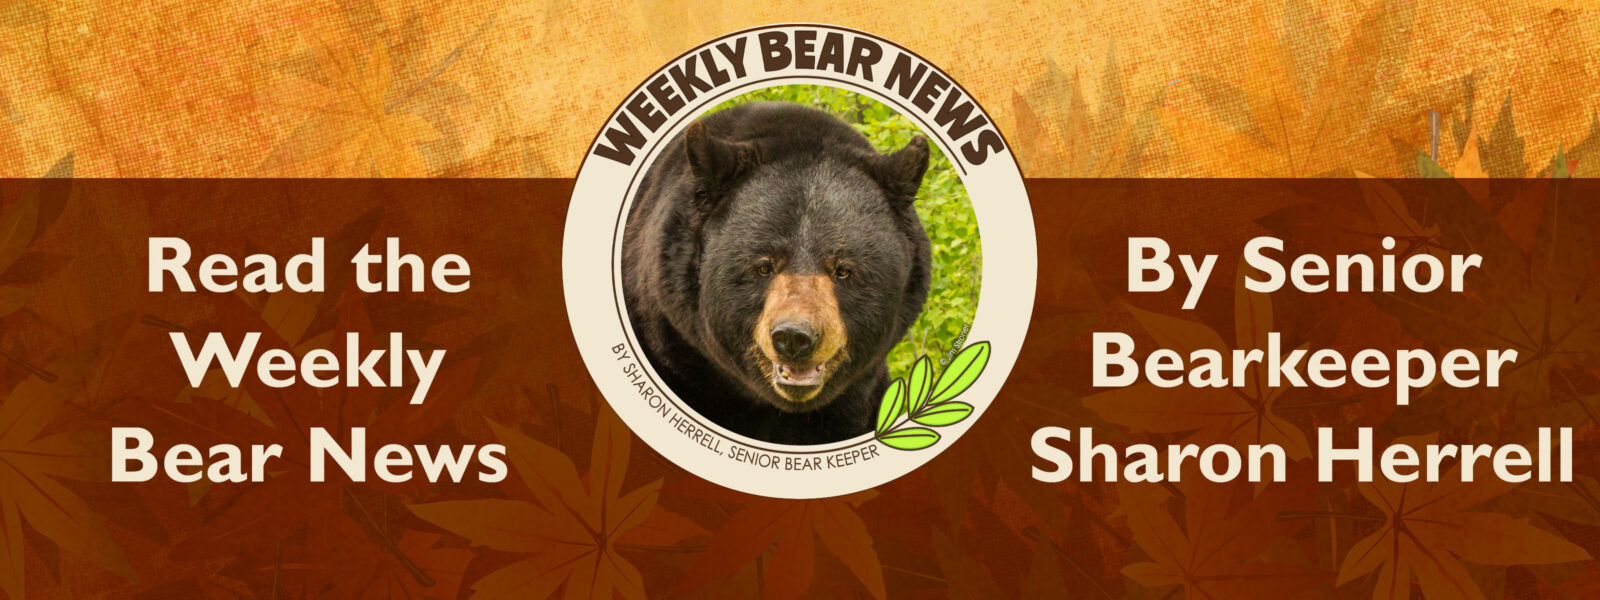 Weekly Bear News banner